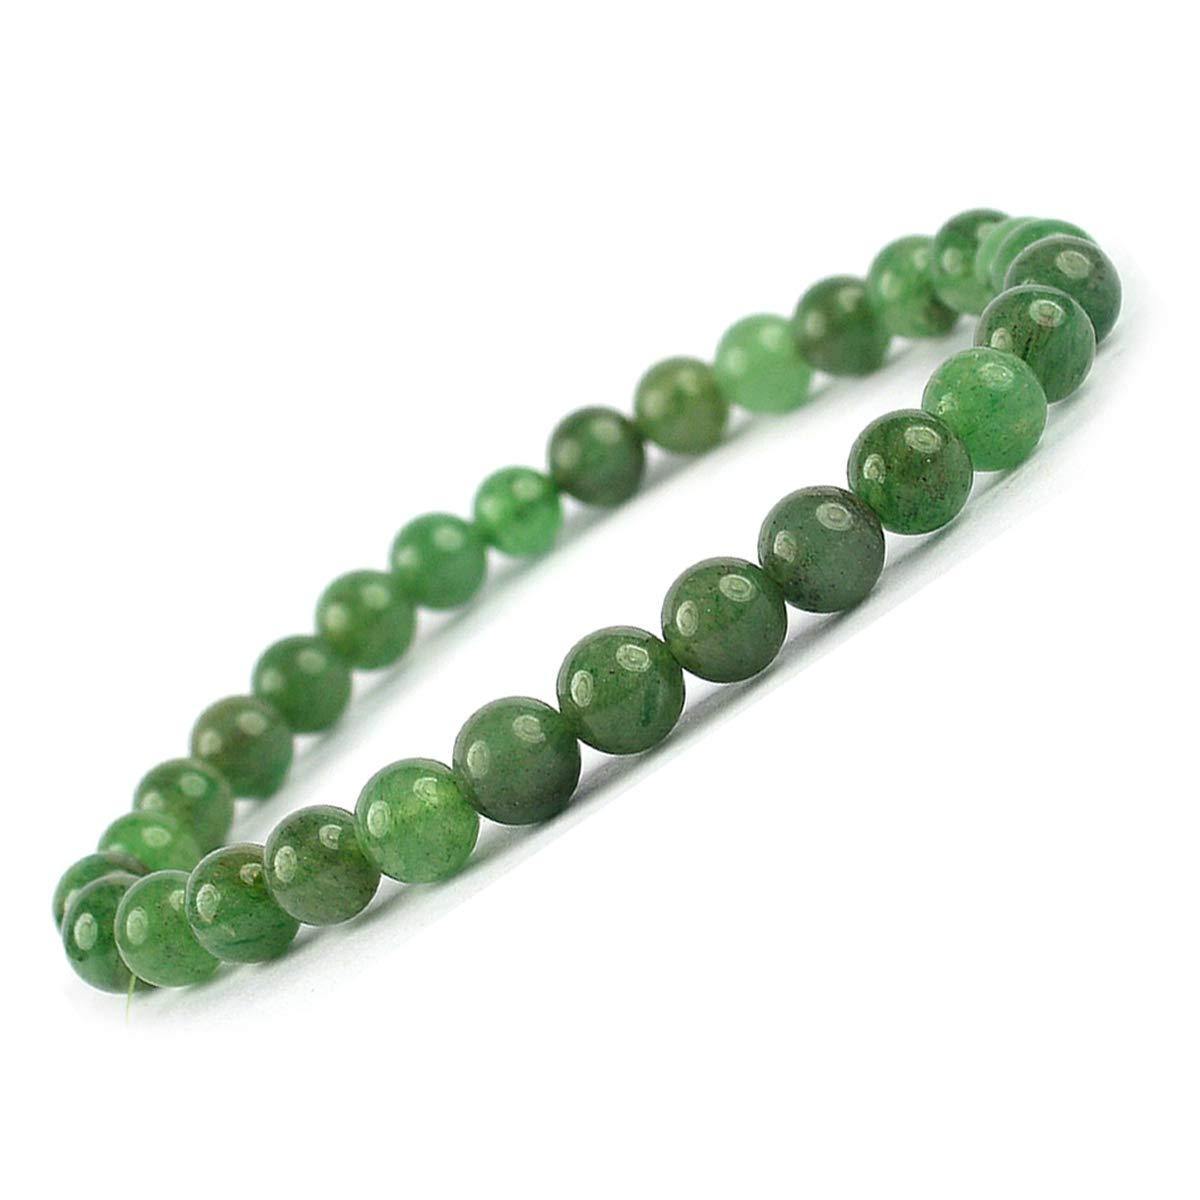 Healing Crystals India | Wholesale Green Jade Bracelet